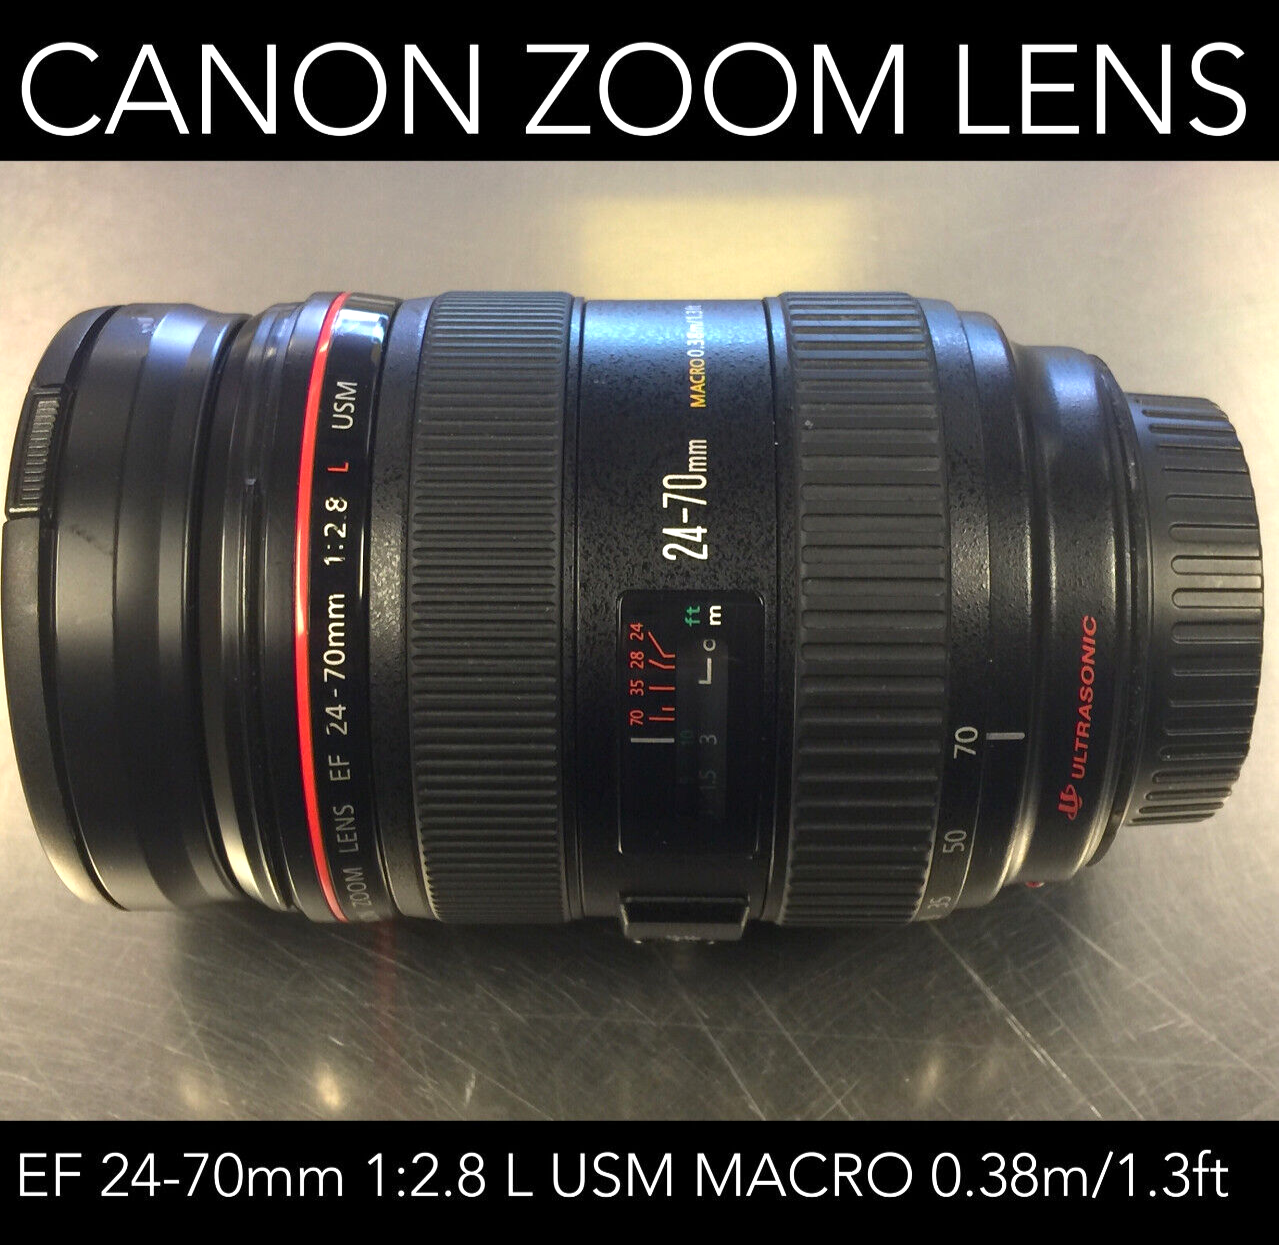 Canon Zoom Lens EF 24-70mm 1:2.8 L USM Macro 0.38m/1.3ft | eBay